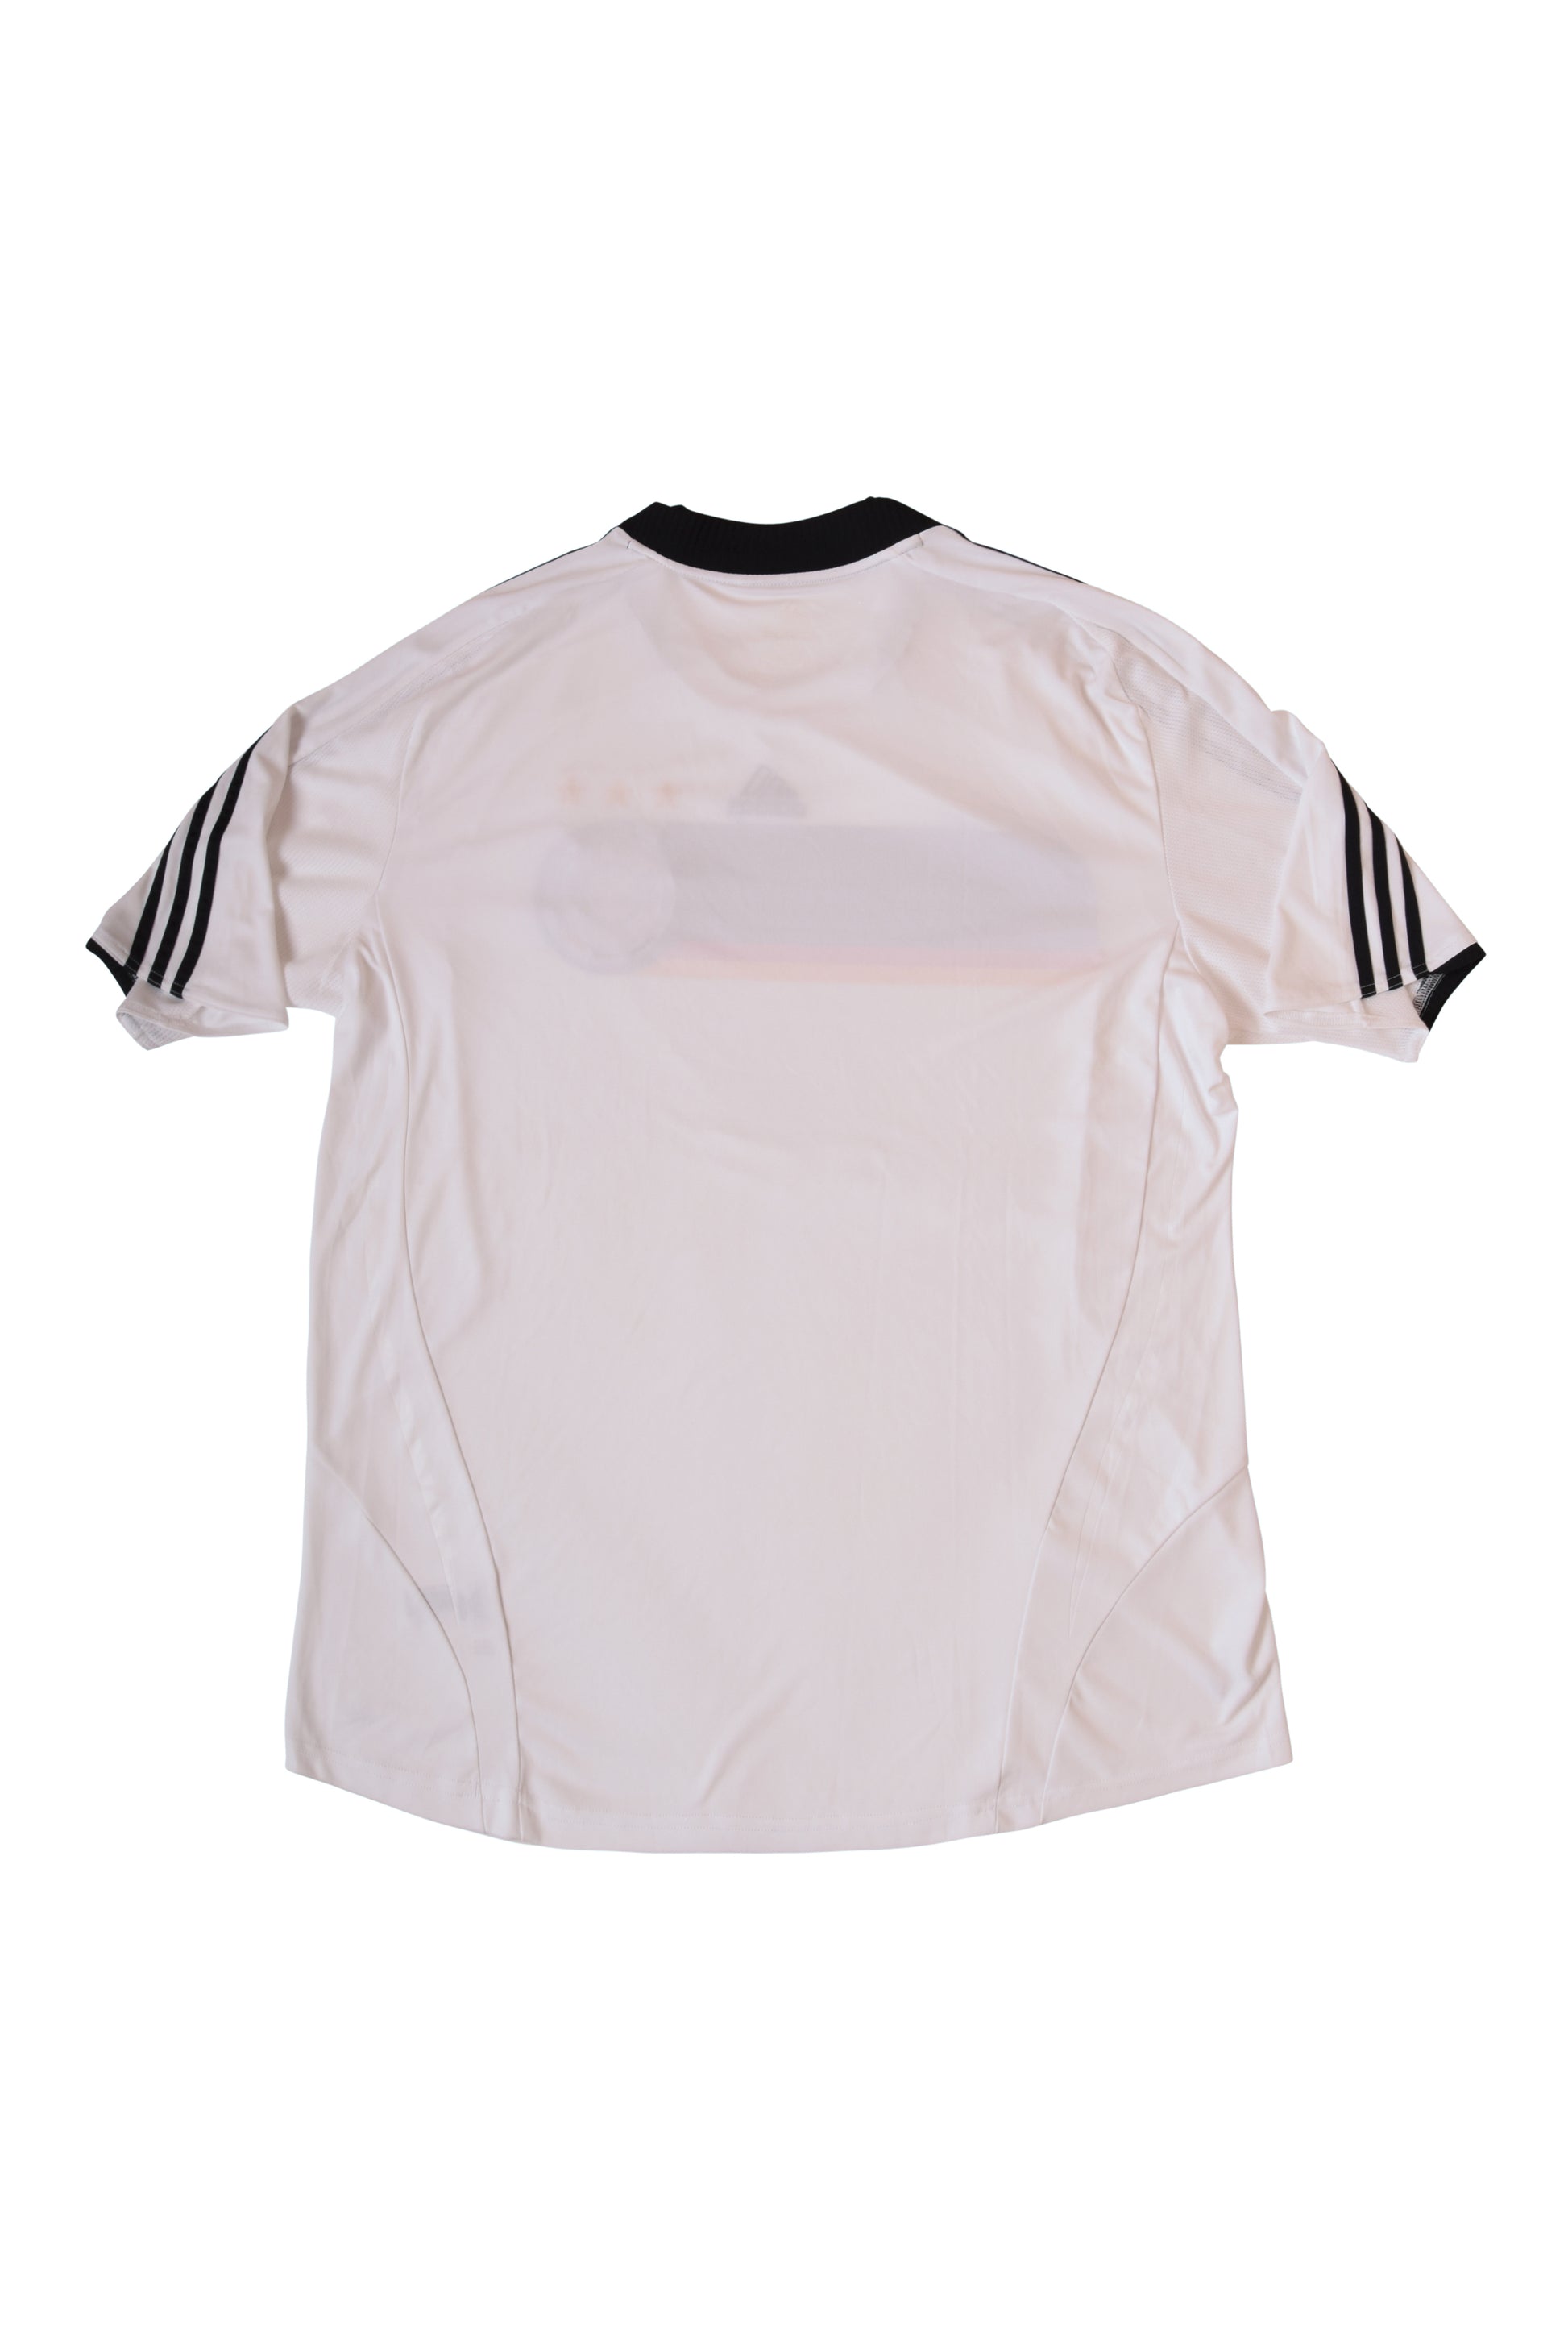 Germany Adidas Home Football Shirt 2007-2008 Size 2XL White